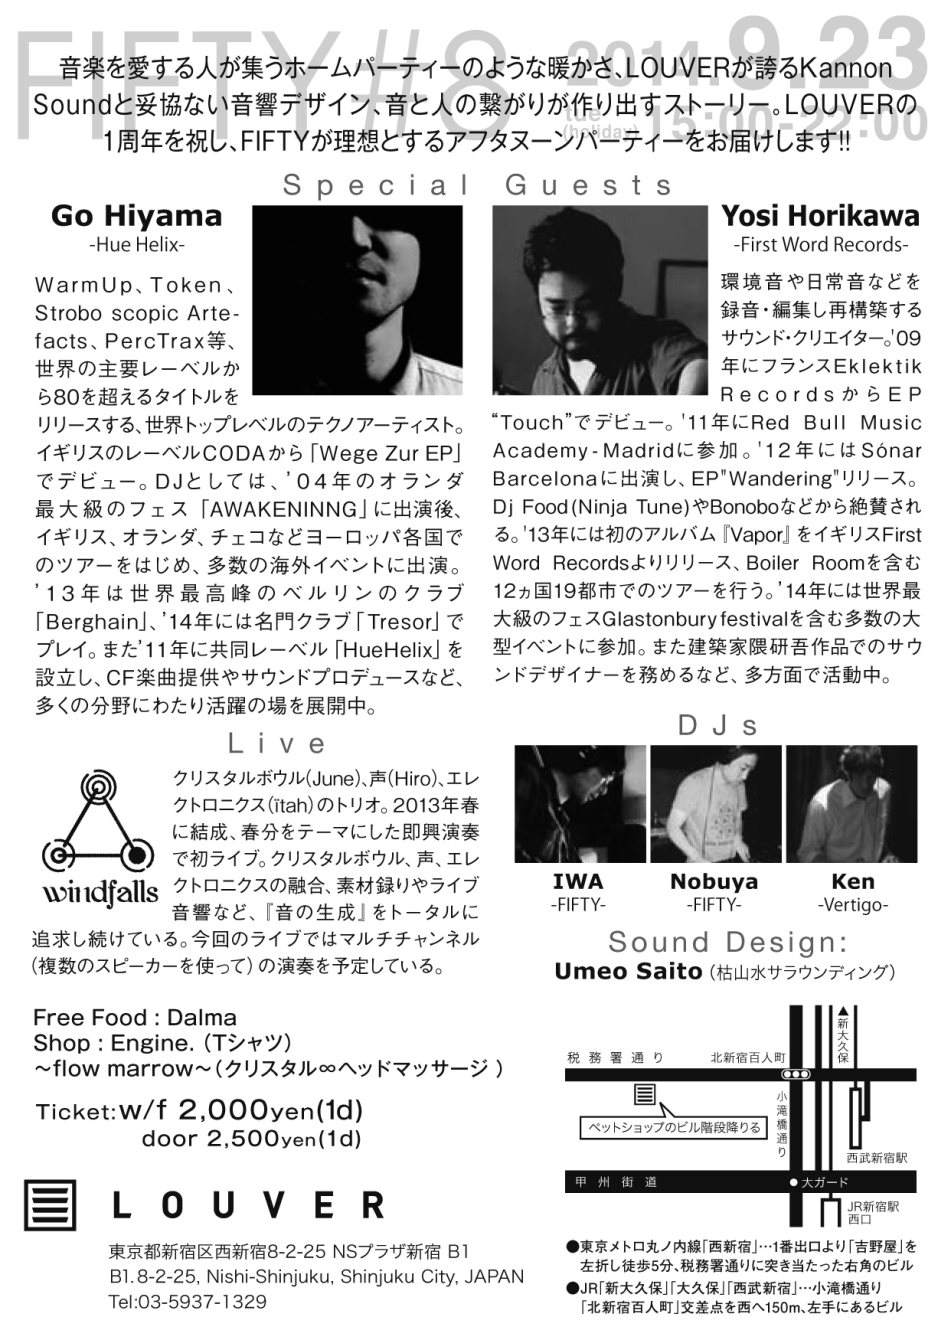 FIFTY #8 Feat. Go Hiyama, Yosi Horikawa - フライヤー裏